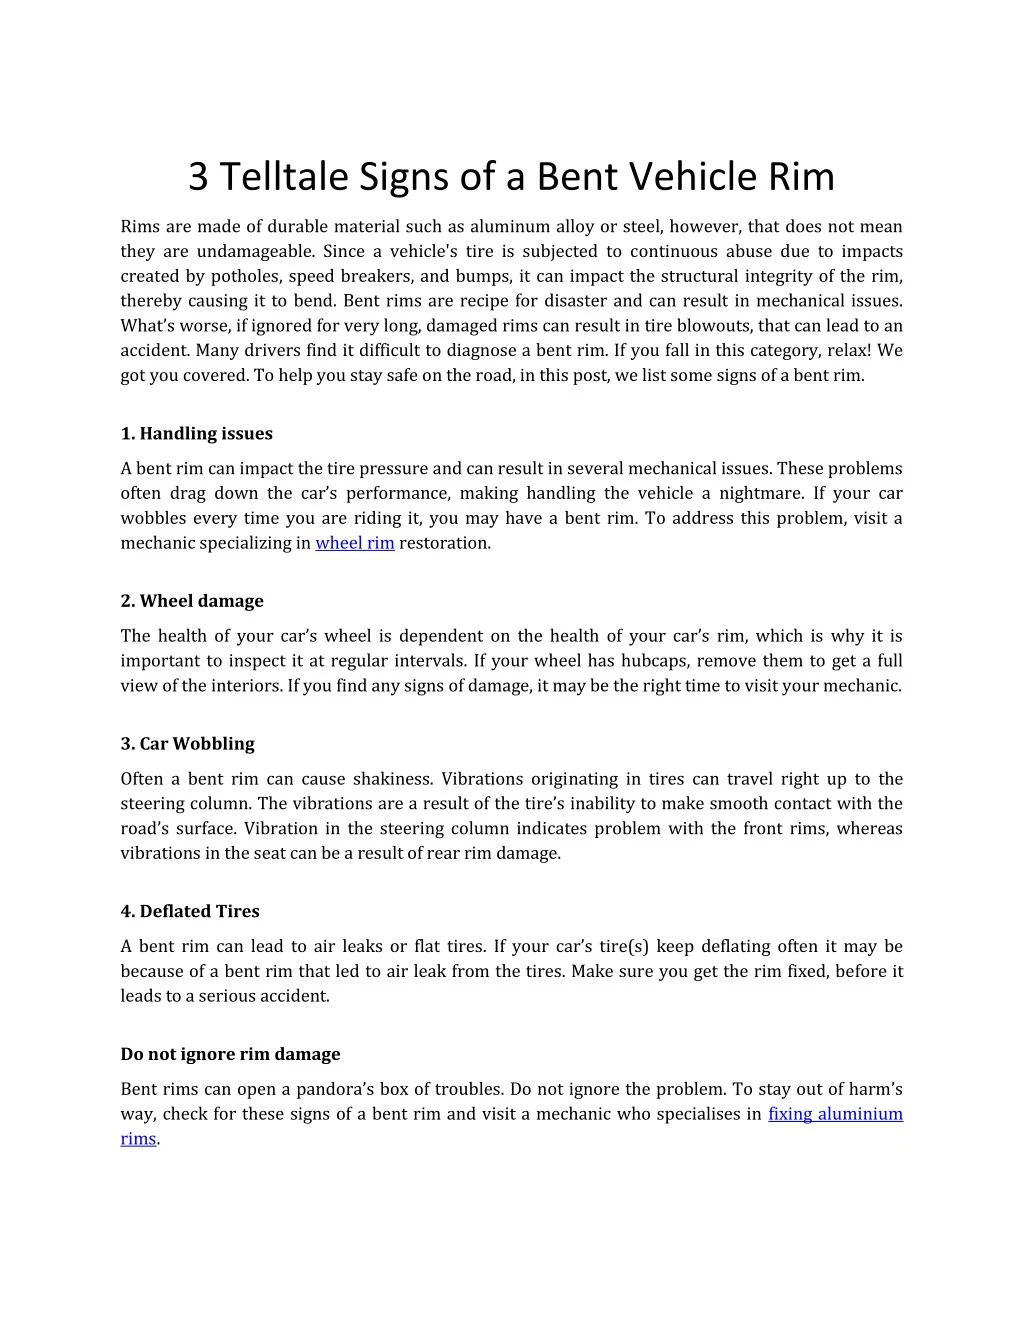 3 telltale signs of a bent vehicle rim